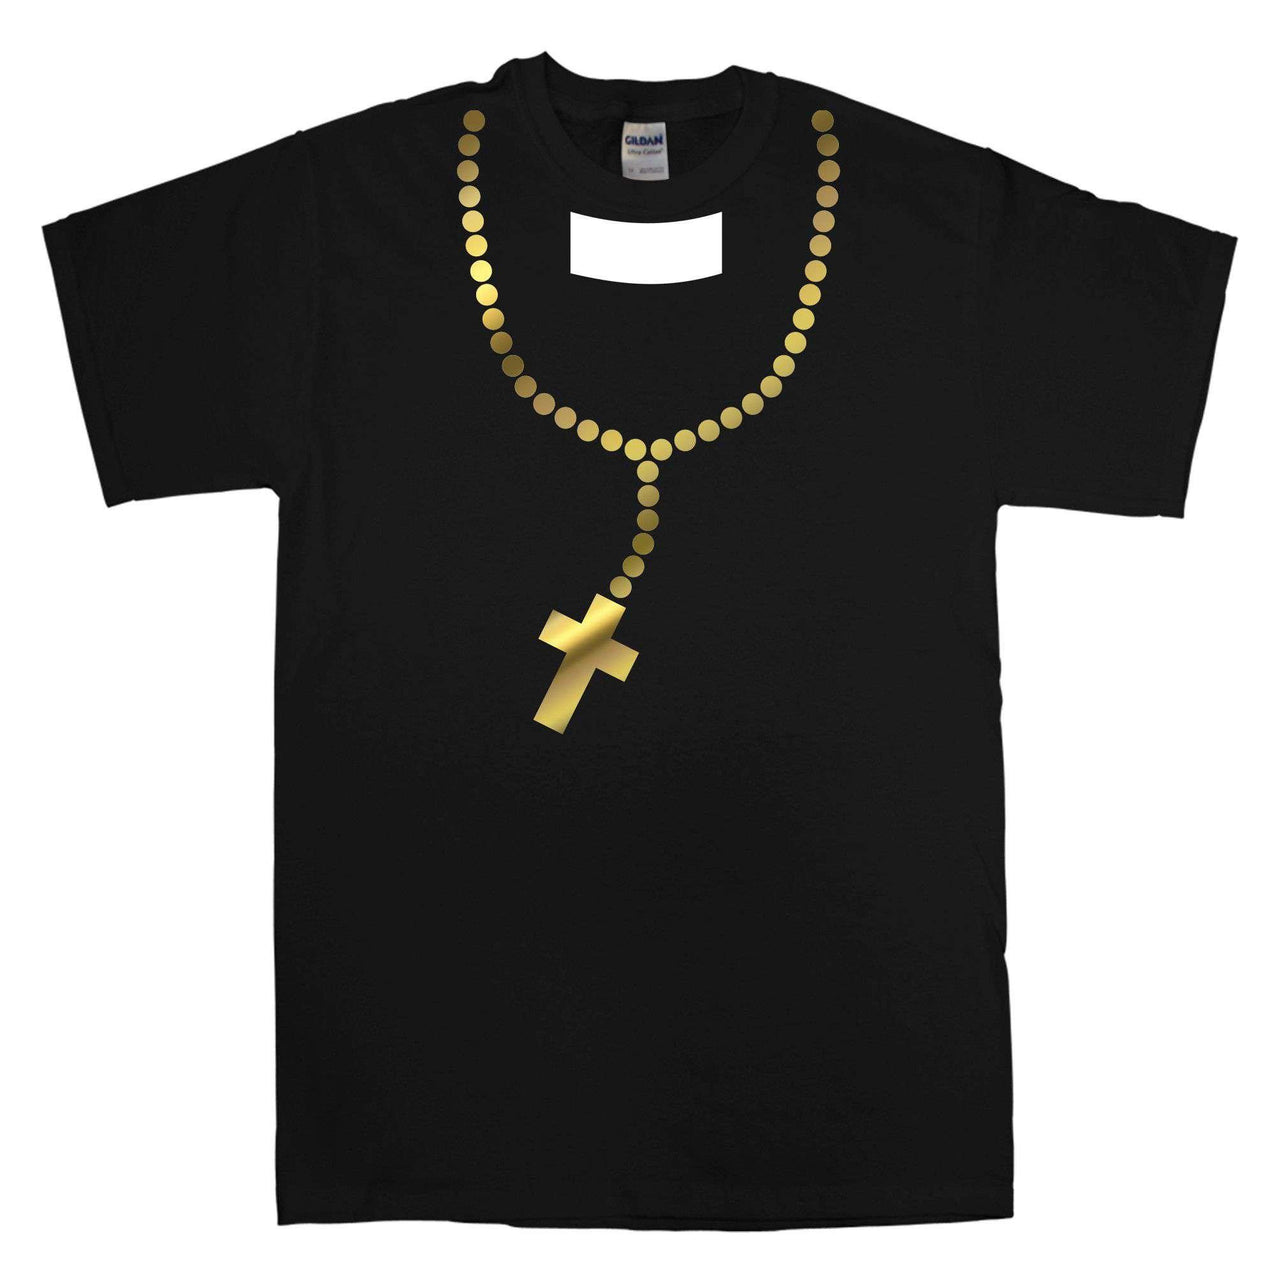 Fancy Dress Priest T-Shirt For Men 8Ball